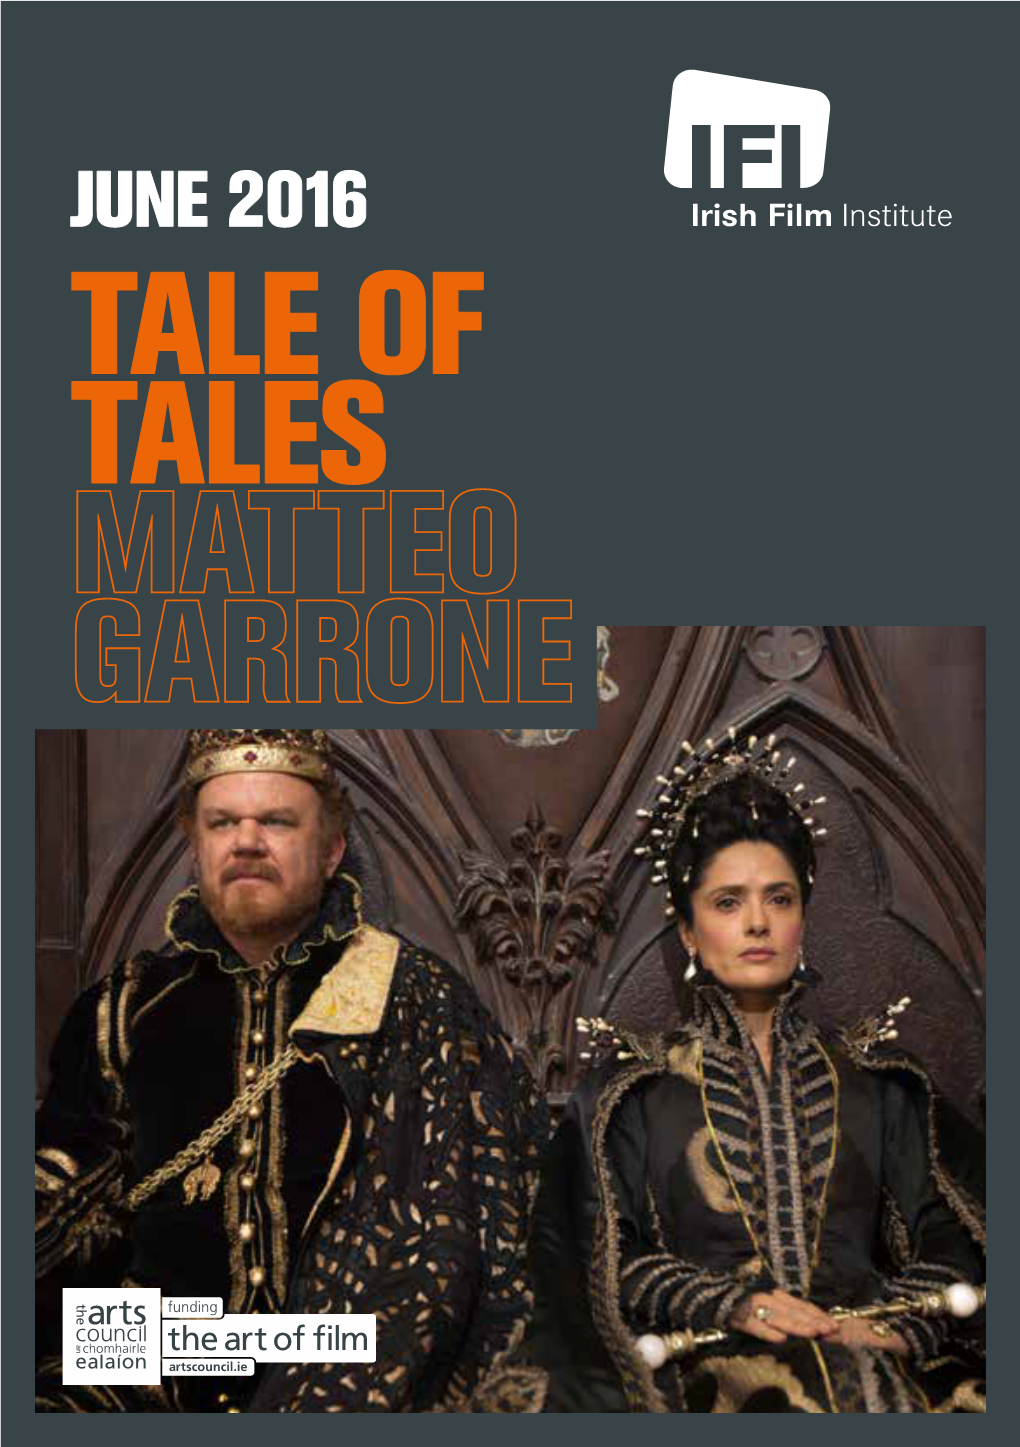 June 2016 Tale of Tales the Irish Film Institute